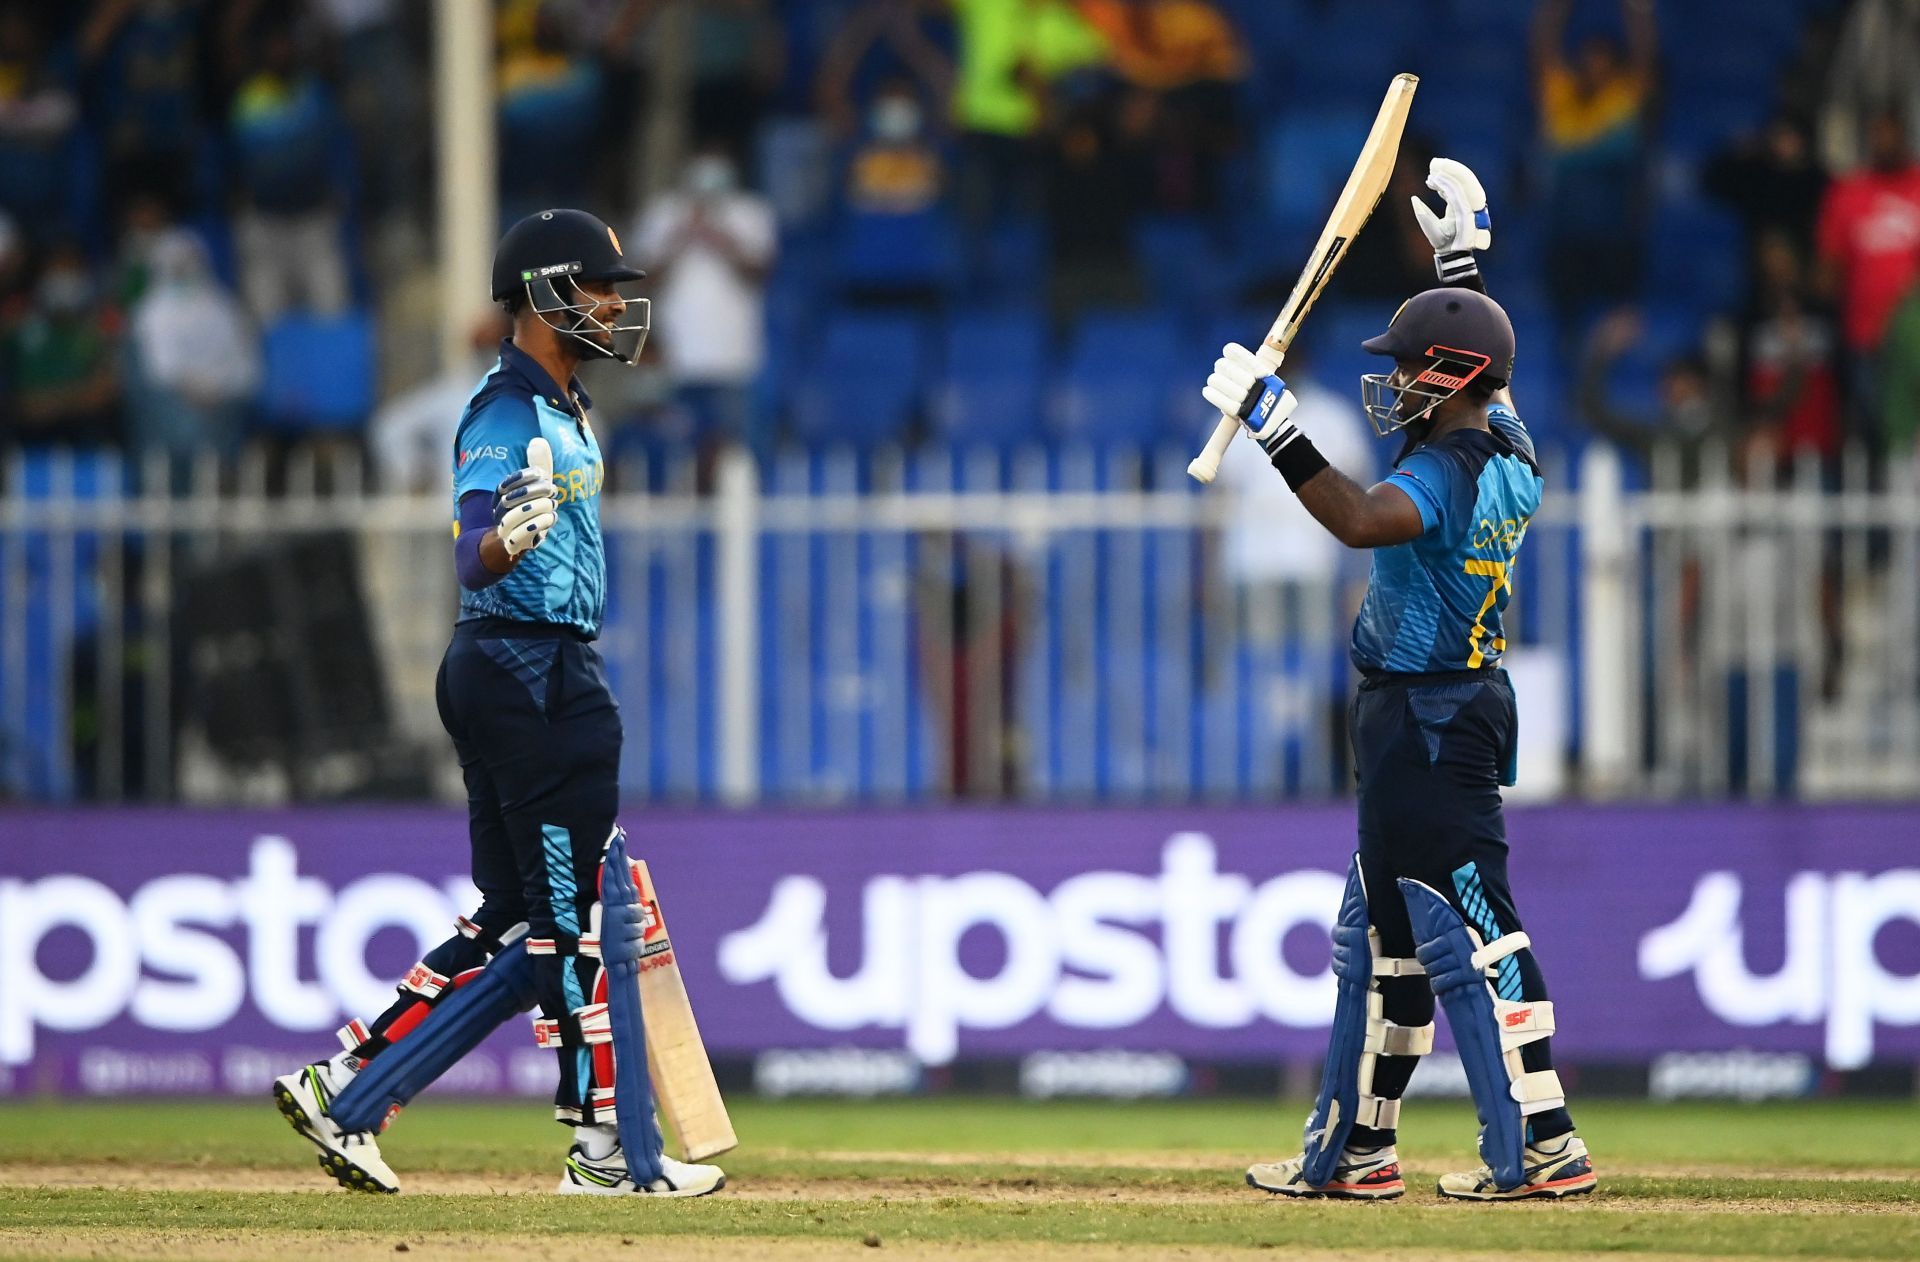 Can Sri Lanka continue their winning streak in ICC T20 World Cup 2021?